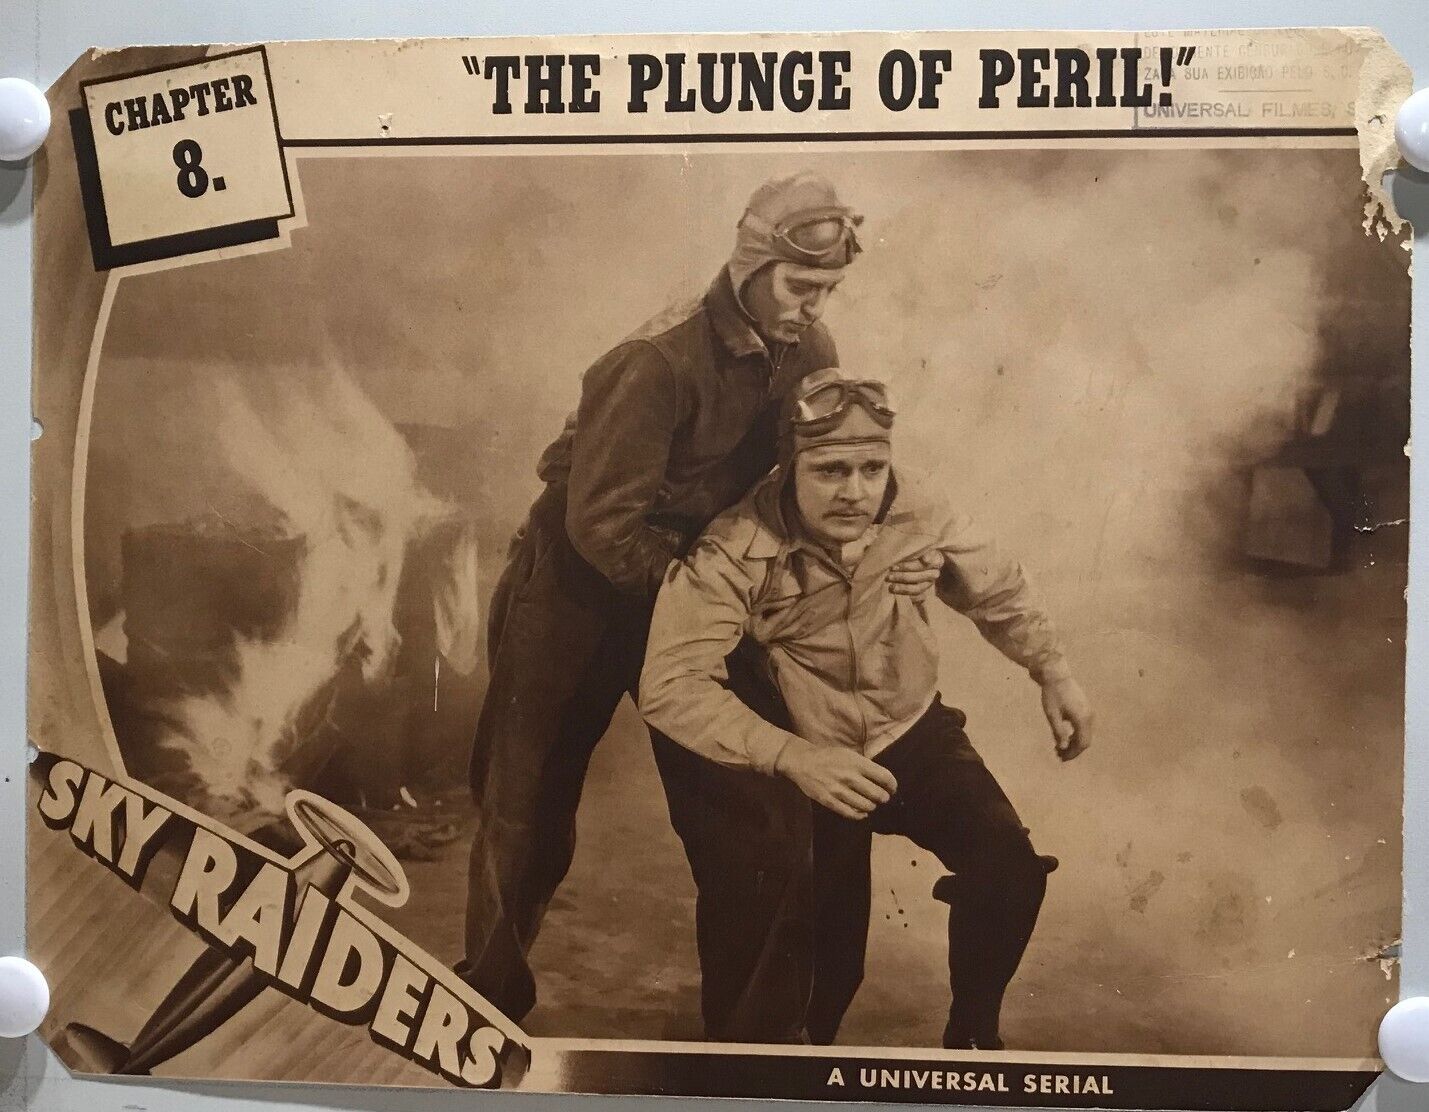 ORIGINAL SERIAL LOBBY CARD - SKY RAIDERS (a) - 1941 - Ch 8 "The Plunge of Per...